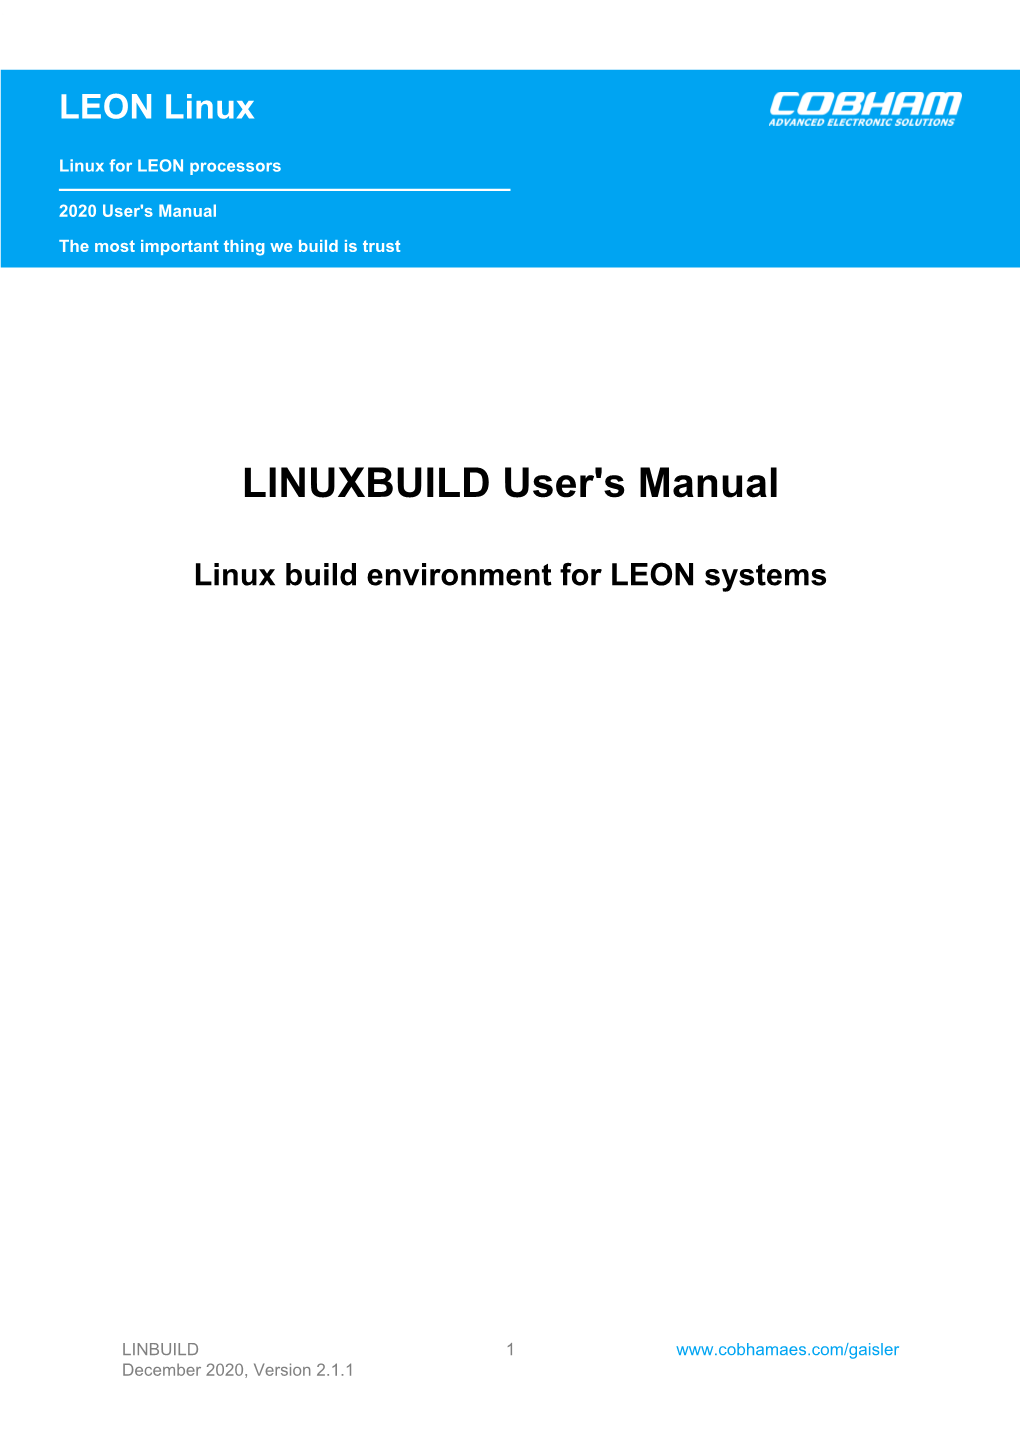 LINUXBUILD User's Manual